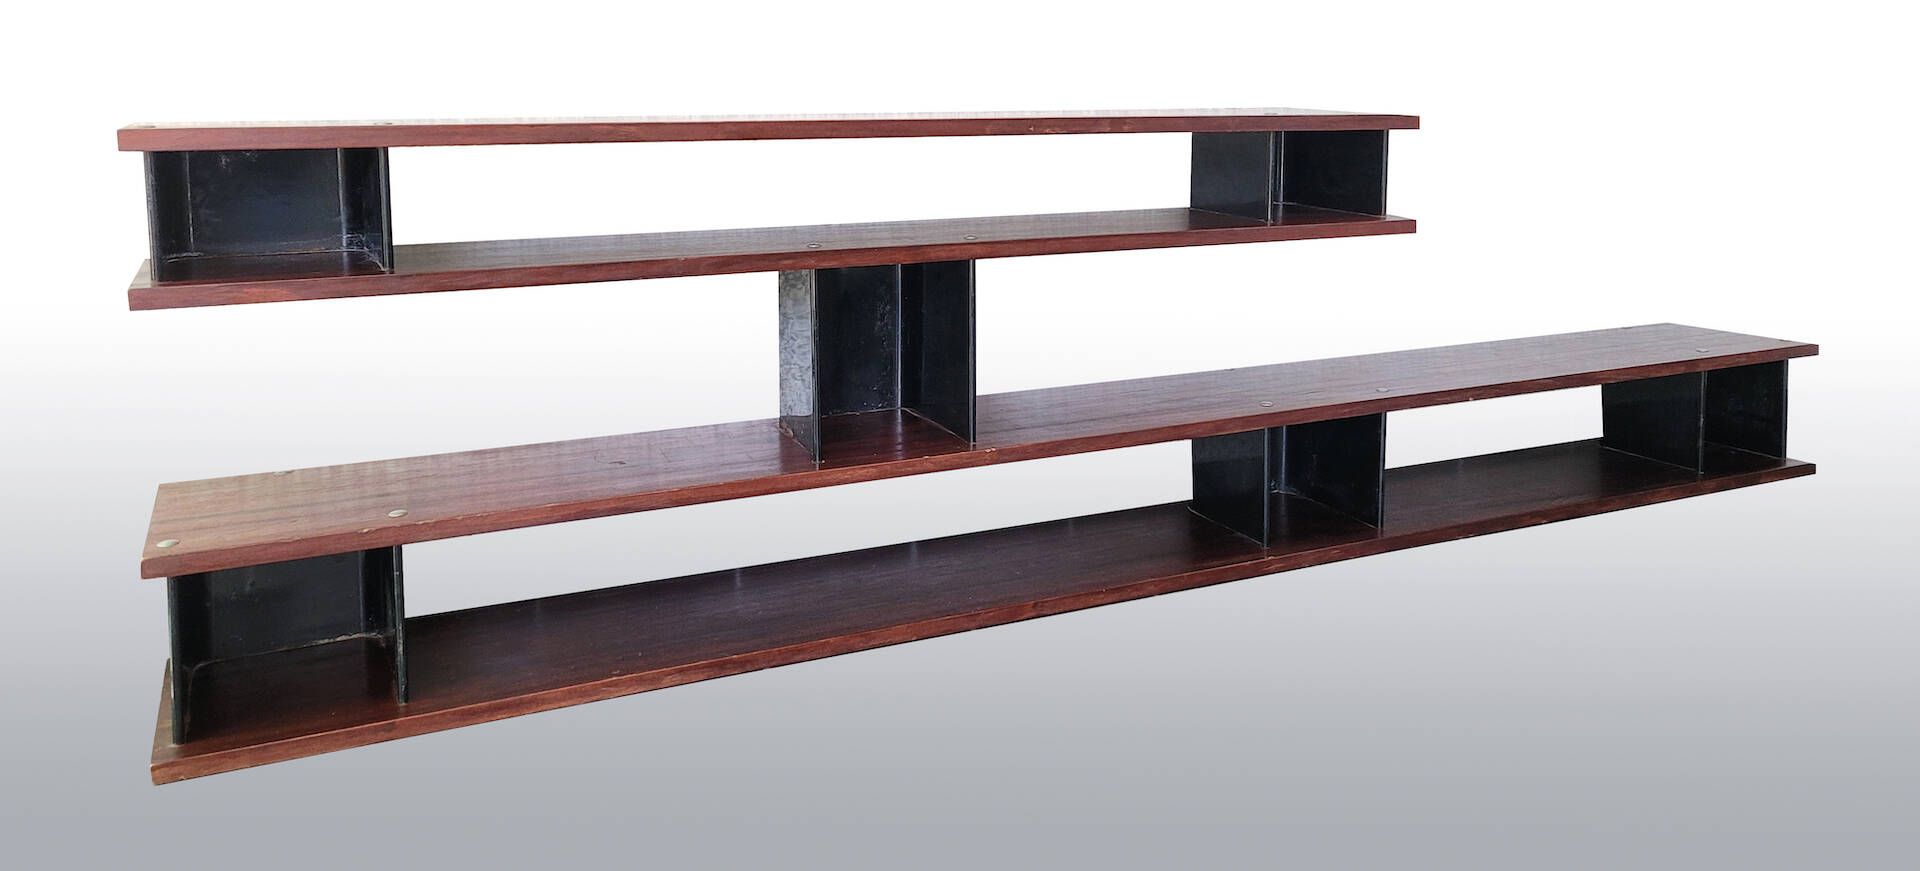 Null 夏洛特-佩里安德（1903-1999）
云 "书柜 - 约 1952 年
木材和黑漆折叠金属板。
72 x 280 x 33 厘米
出处：毛里塔尼亚坎&hellip;